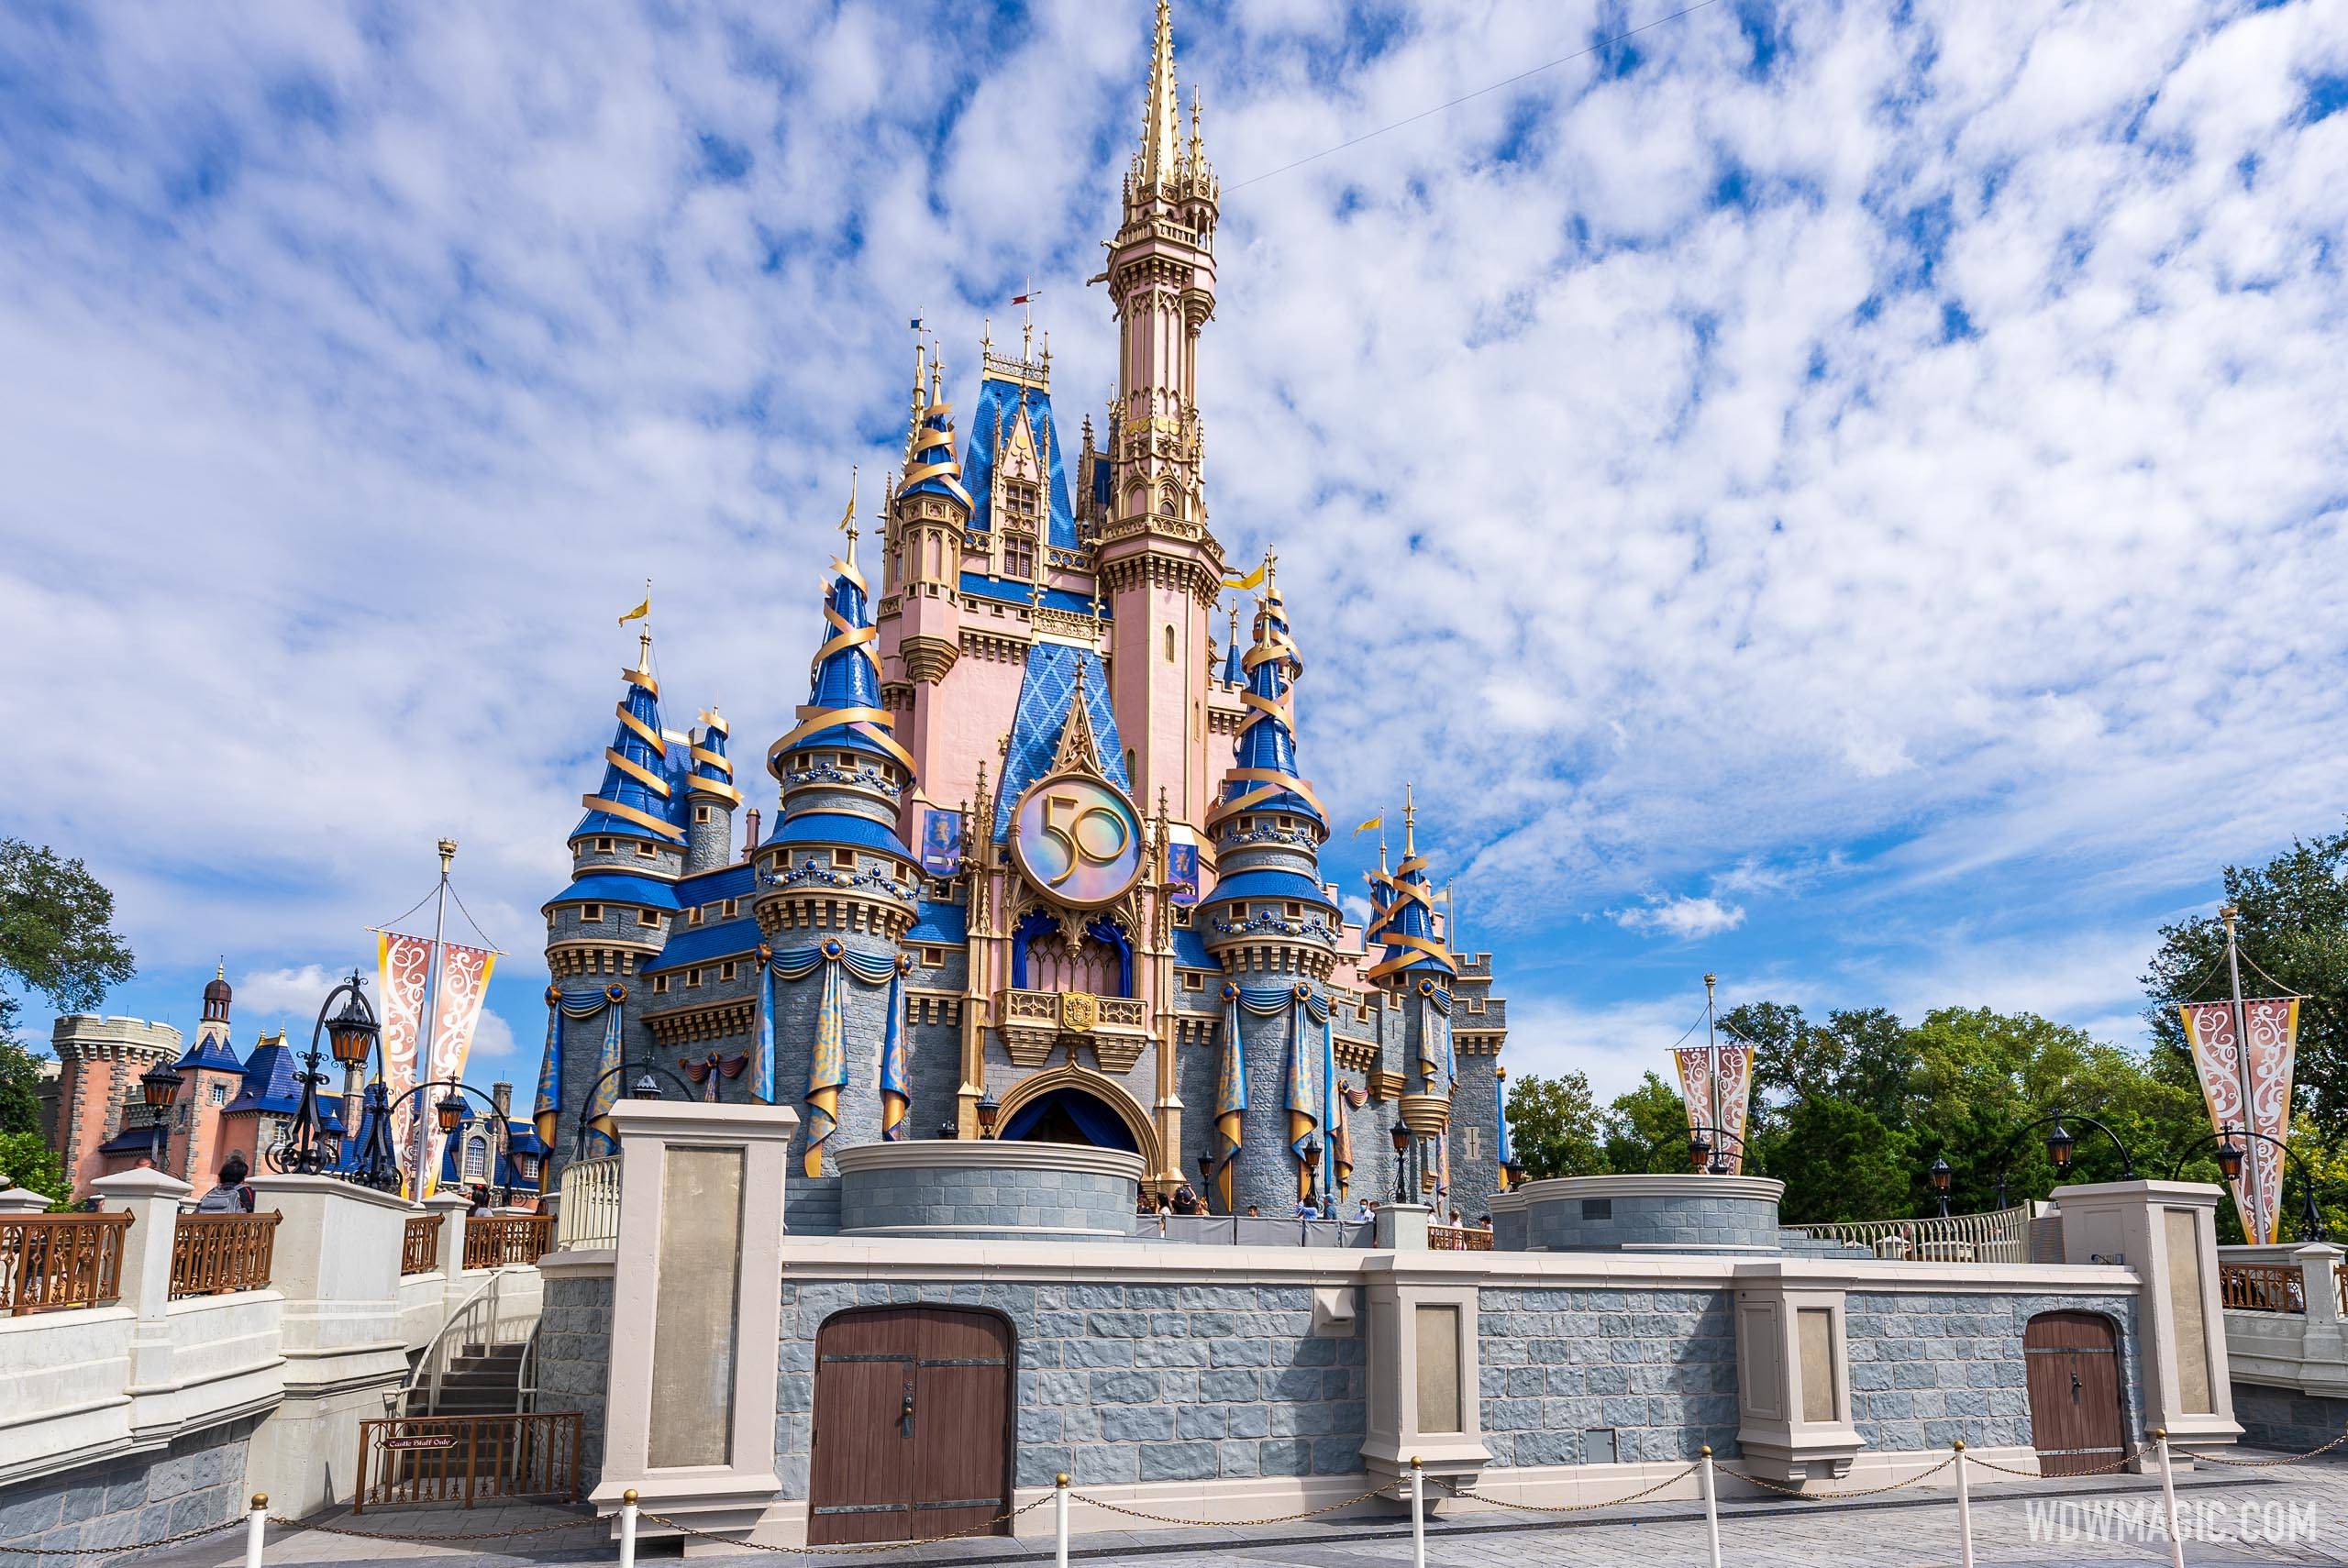 Steps and platforms return to Cinderella Castle stage at Magic Kingdom